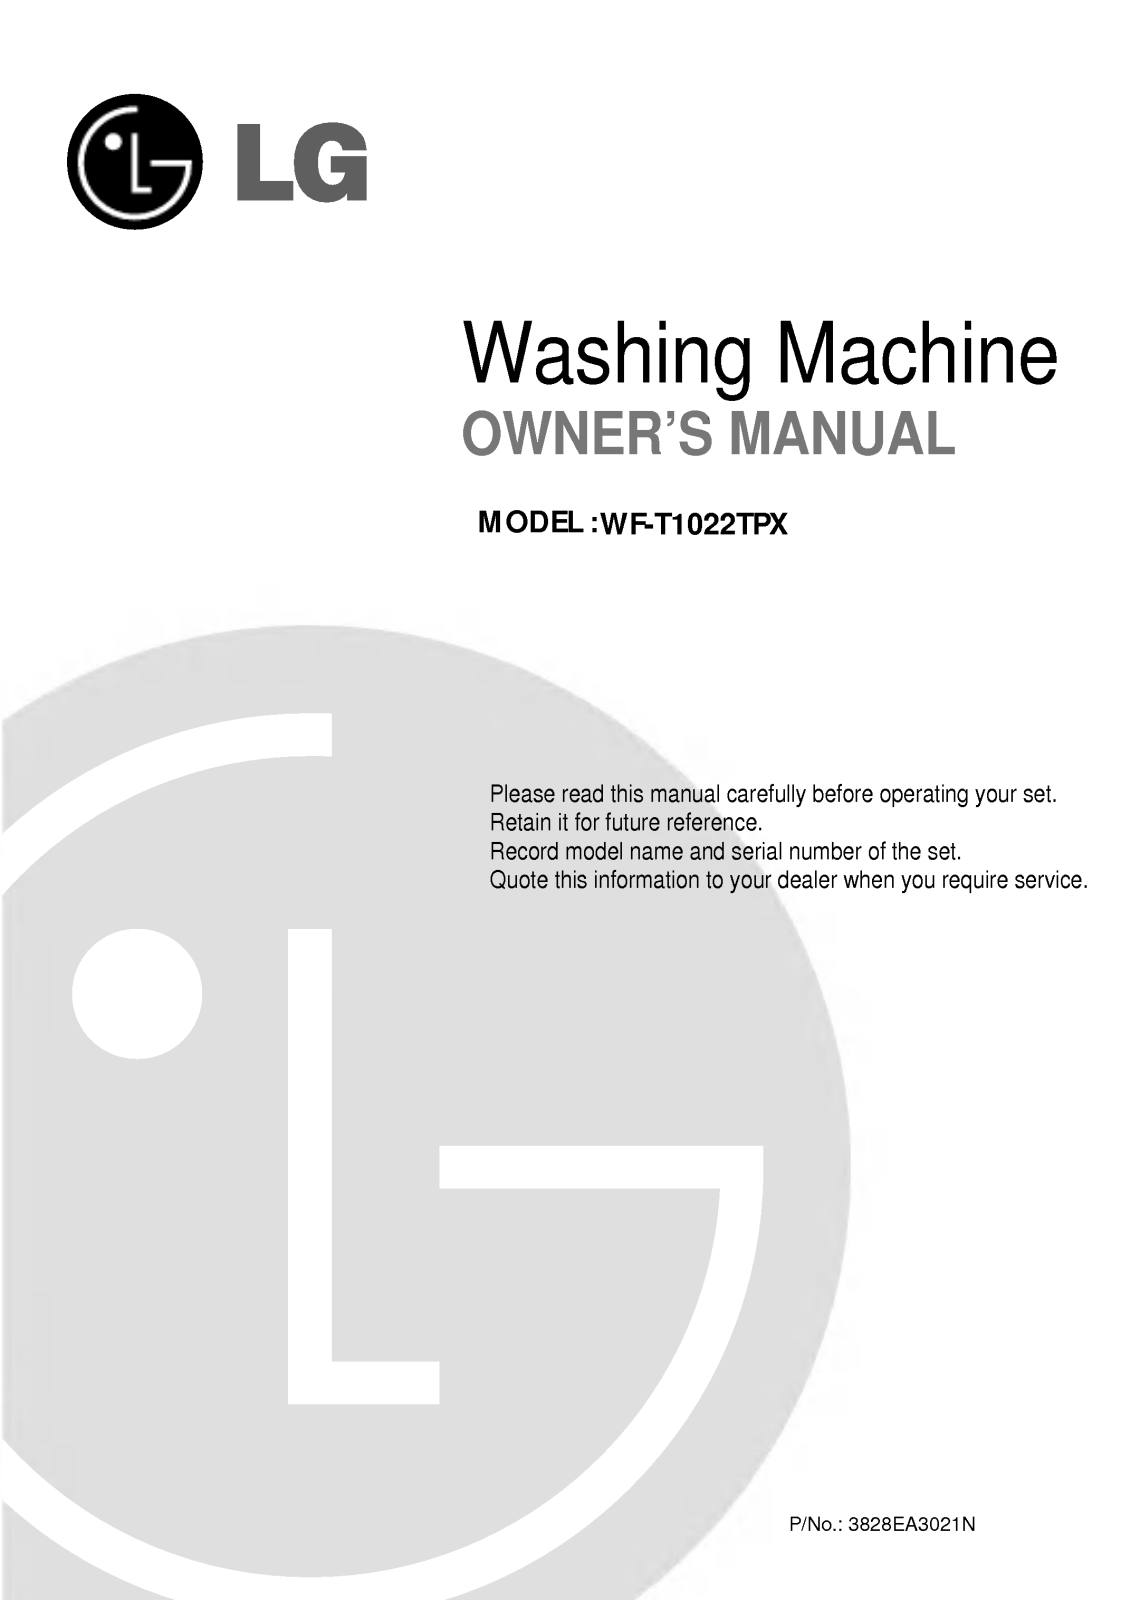 LG WF-T1022TPK Owner’s Manual